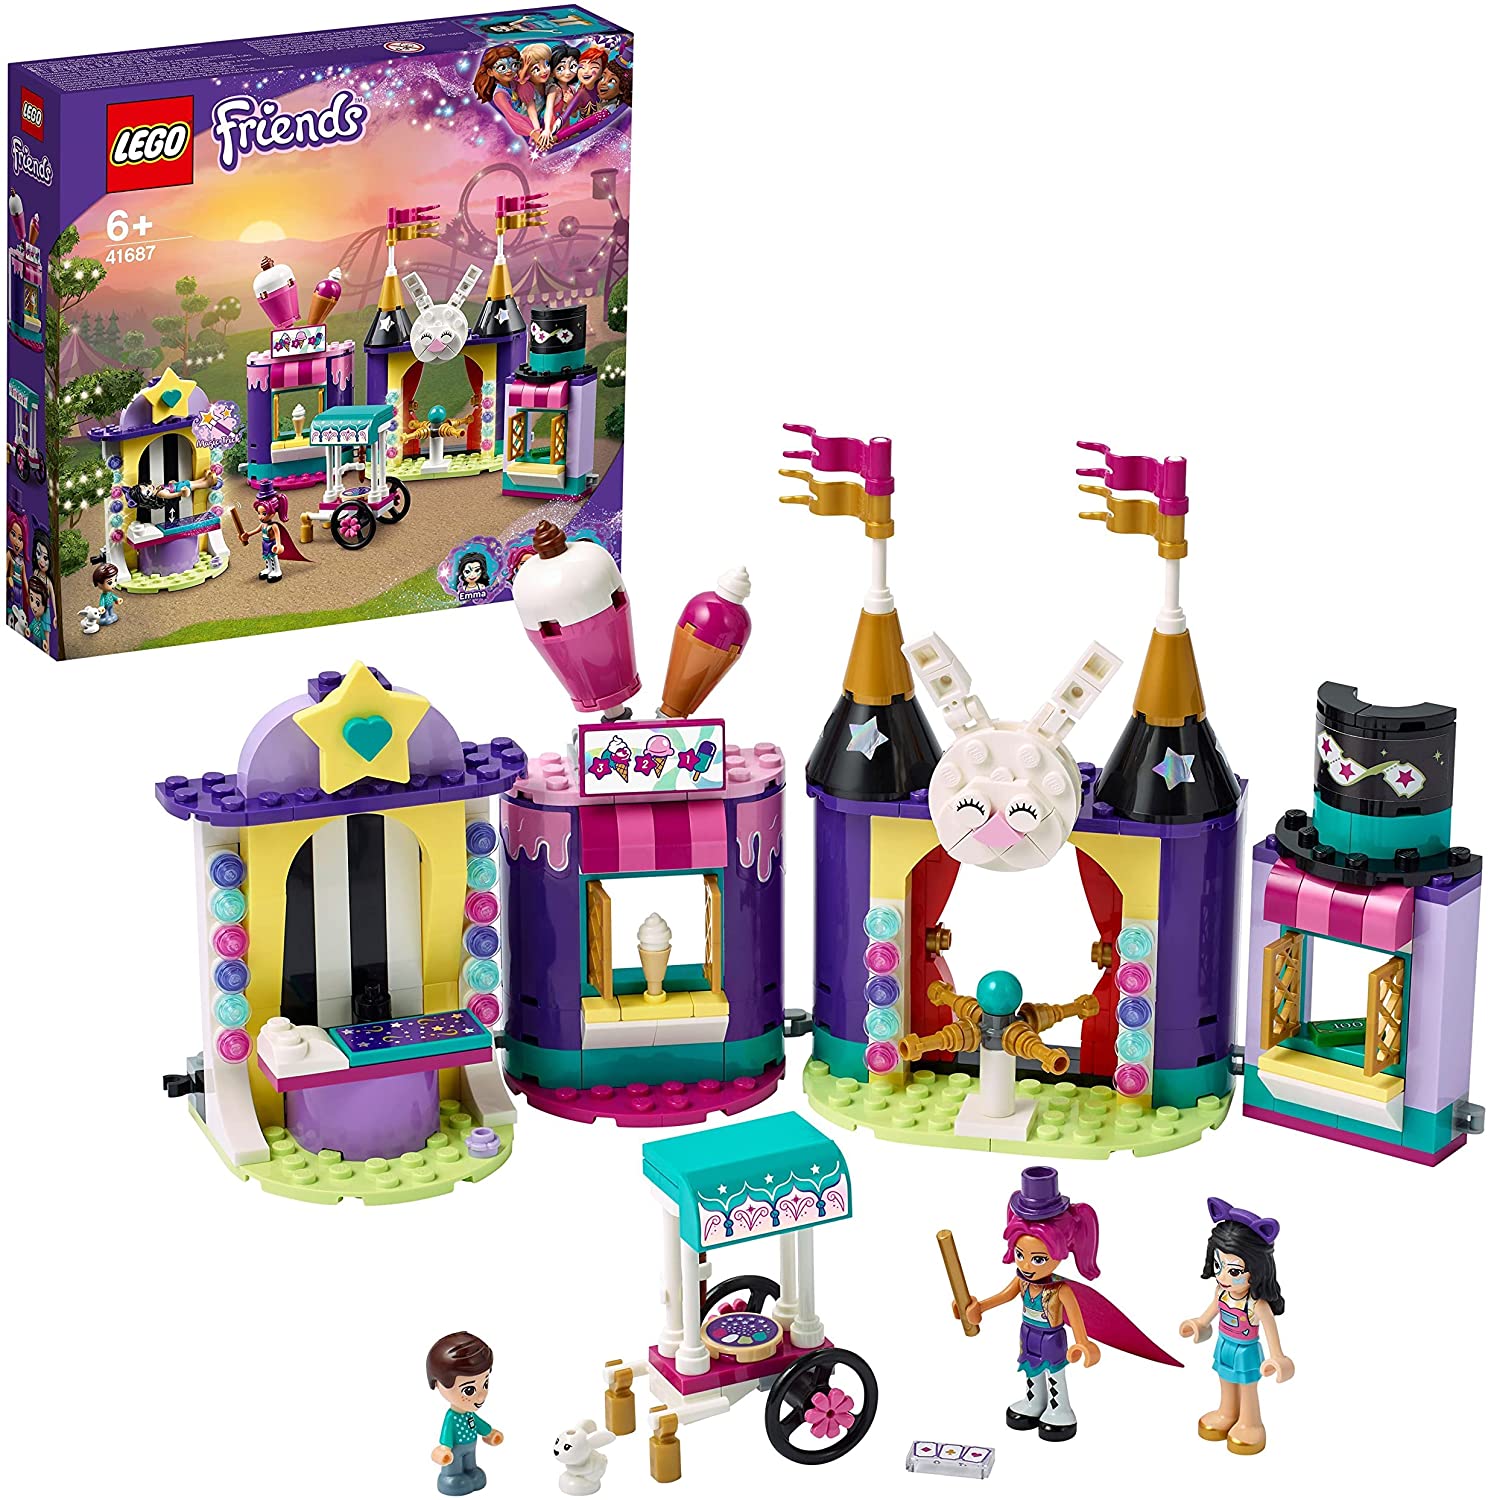 LEGO 41687 Friends Magic Fairground Caves, Amusement Park with Magic Tricks